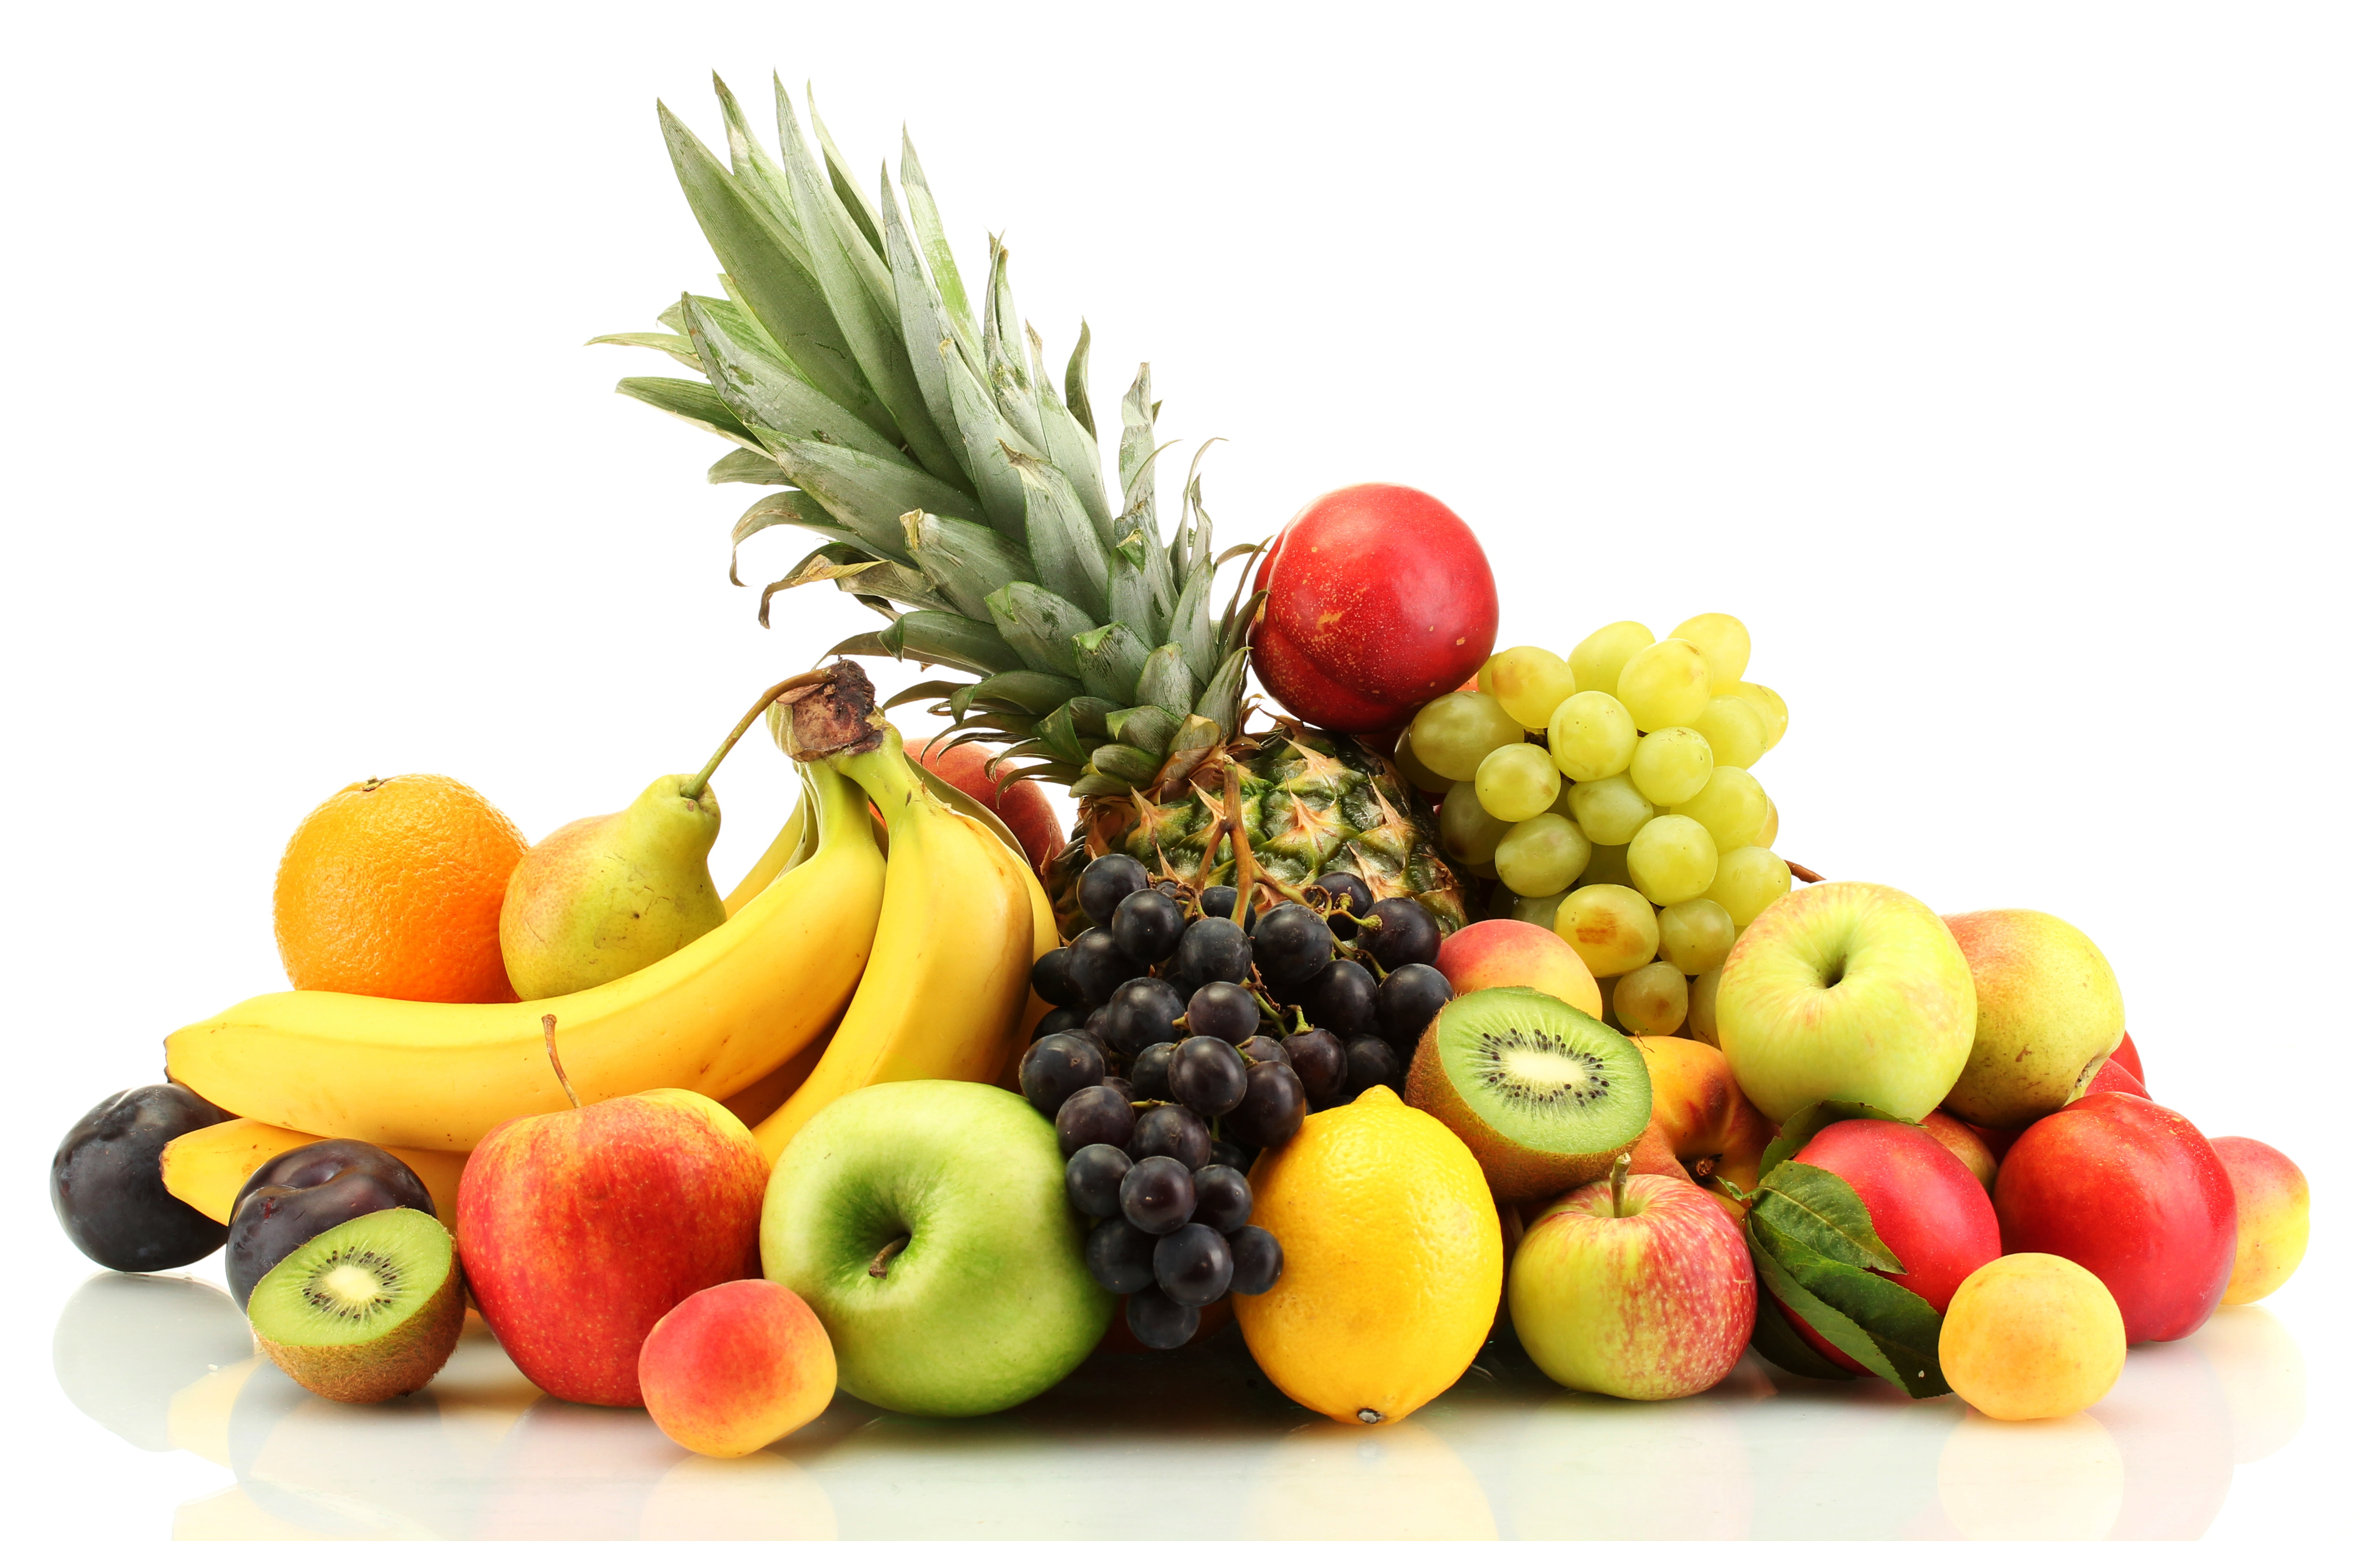 assorted fruits lot, berries, apples, oranges, grapes, bananas